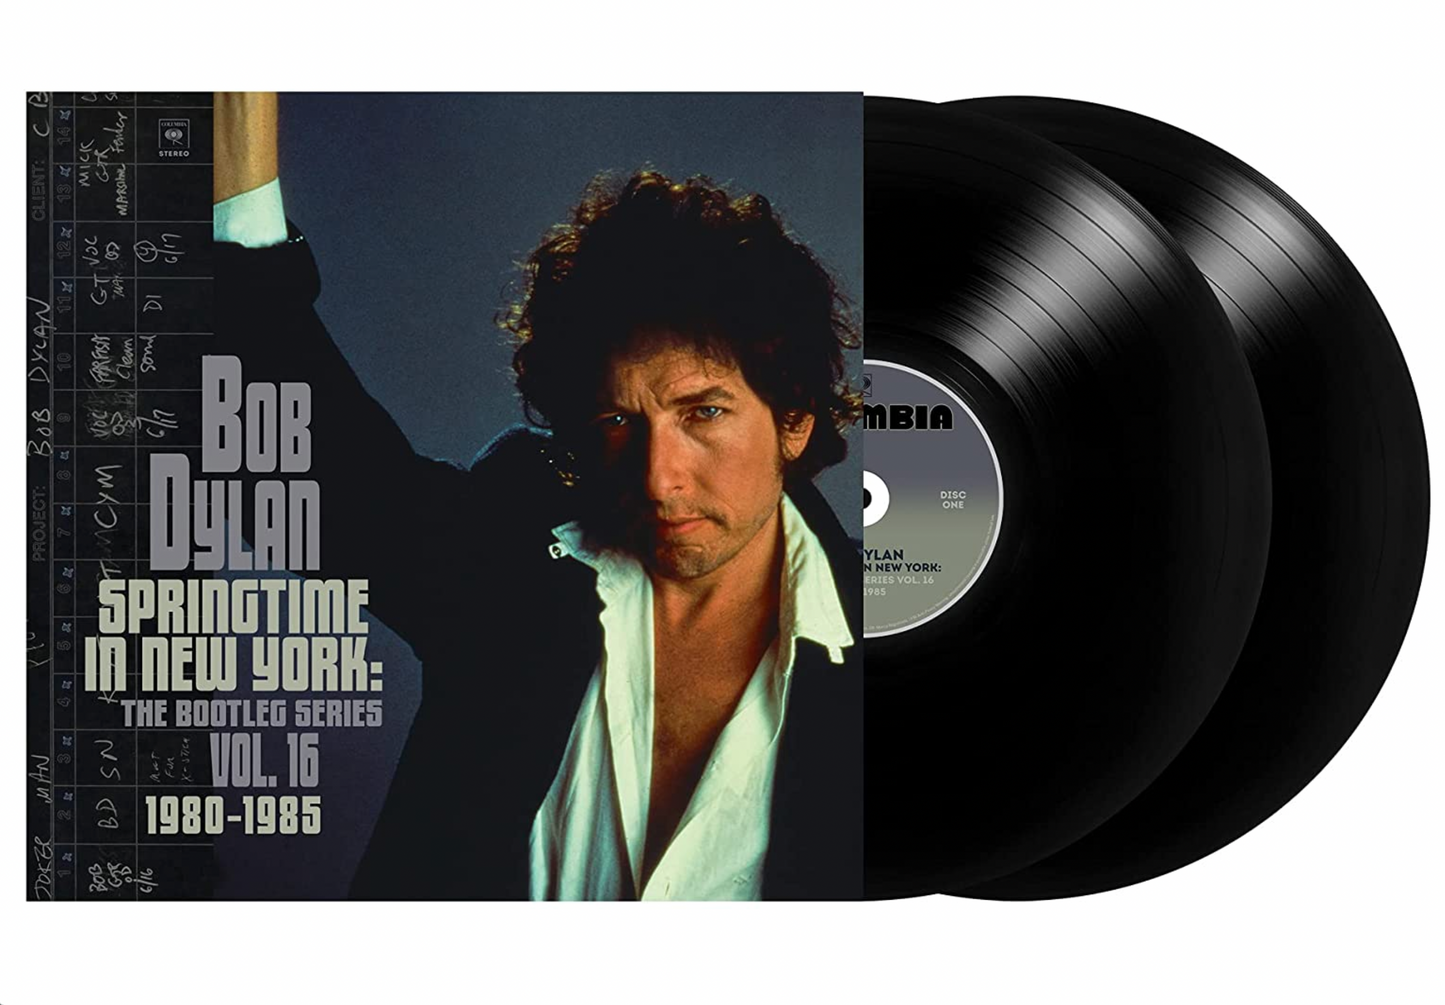 Dylan, Bob - Springtime In New York the Bootleg Series Vol. 16